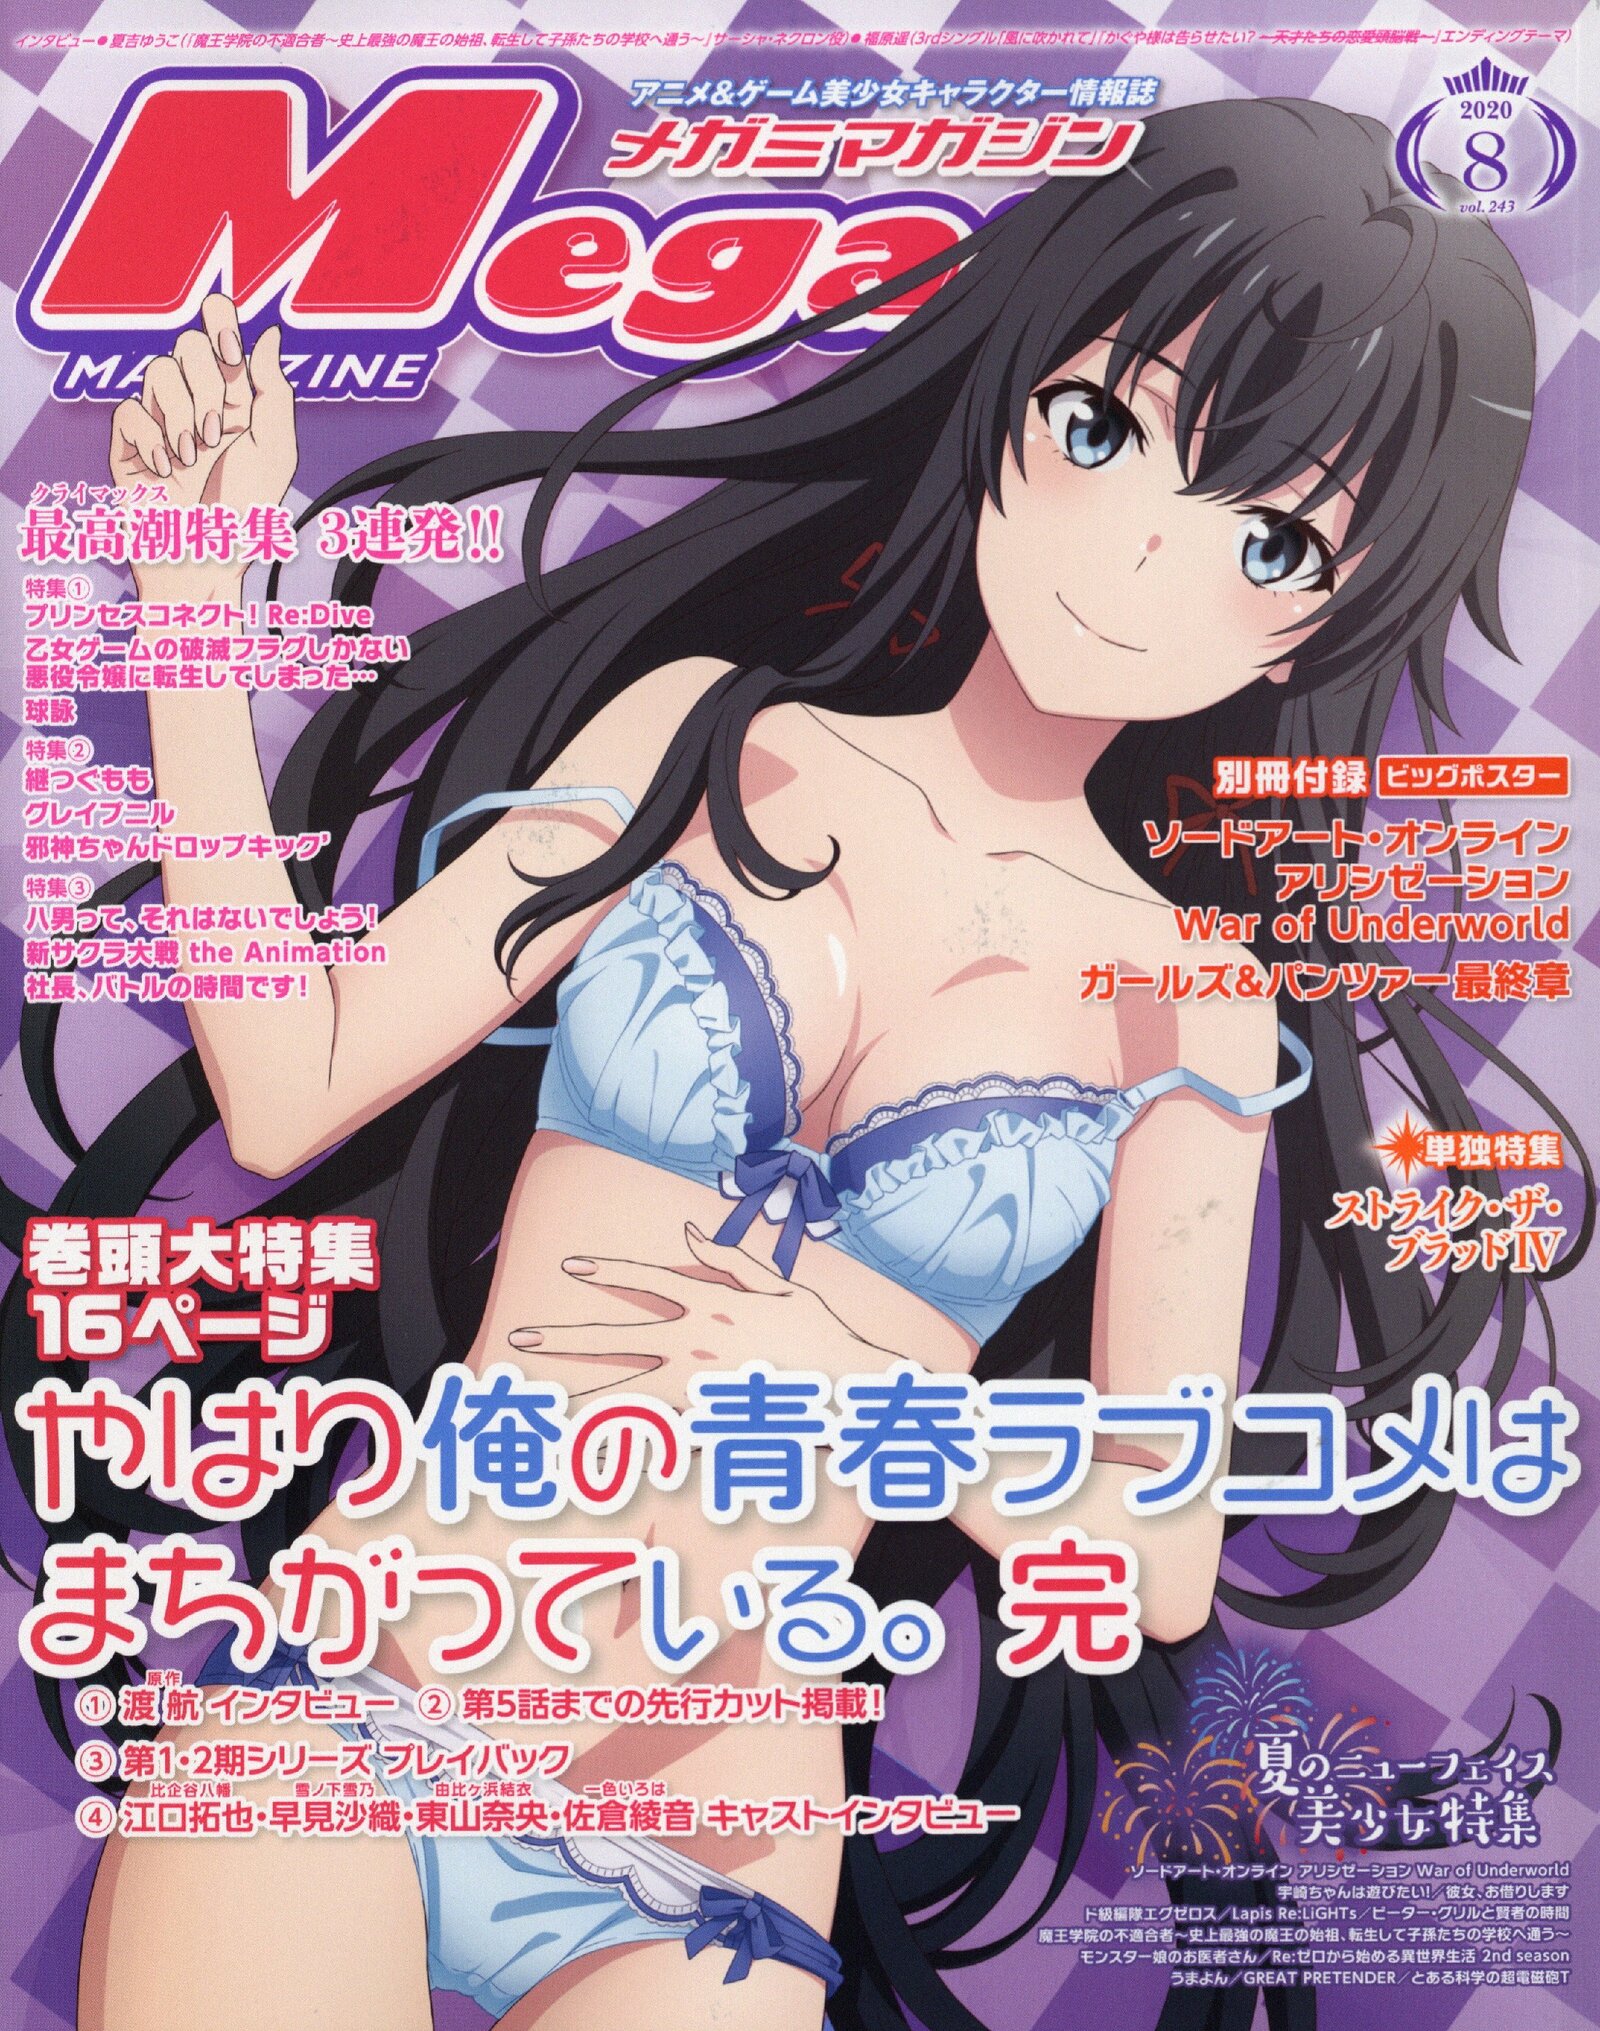 Megami Magazine august 2020